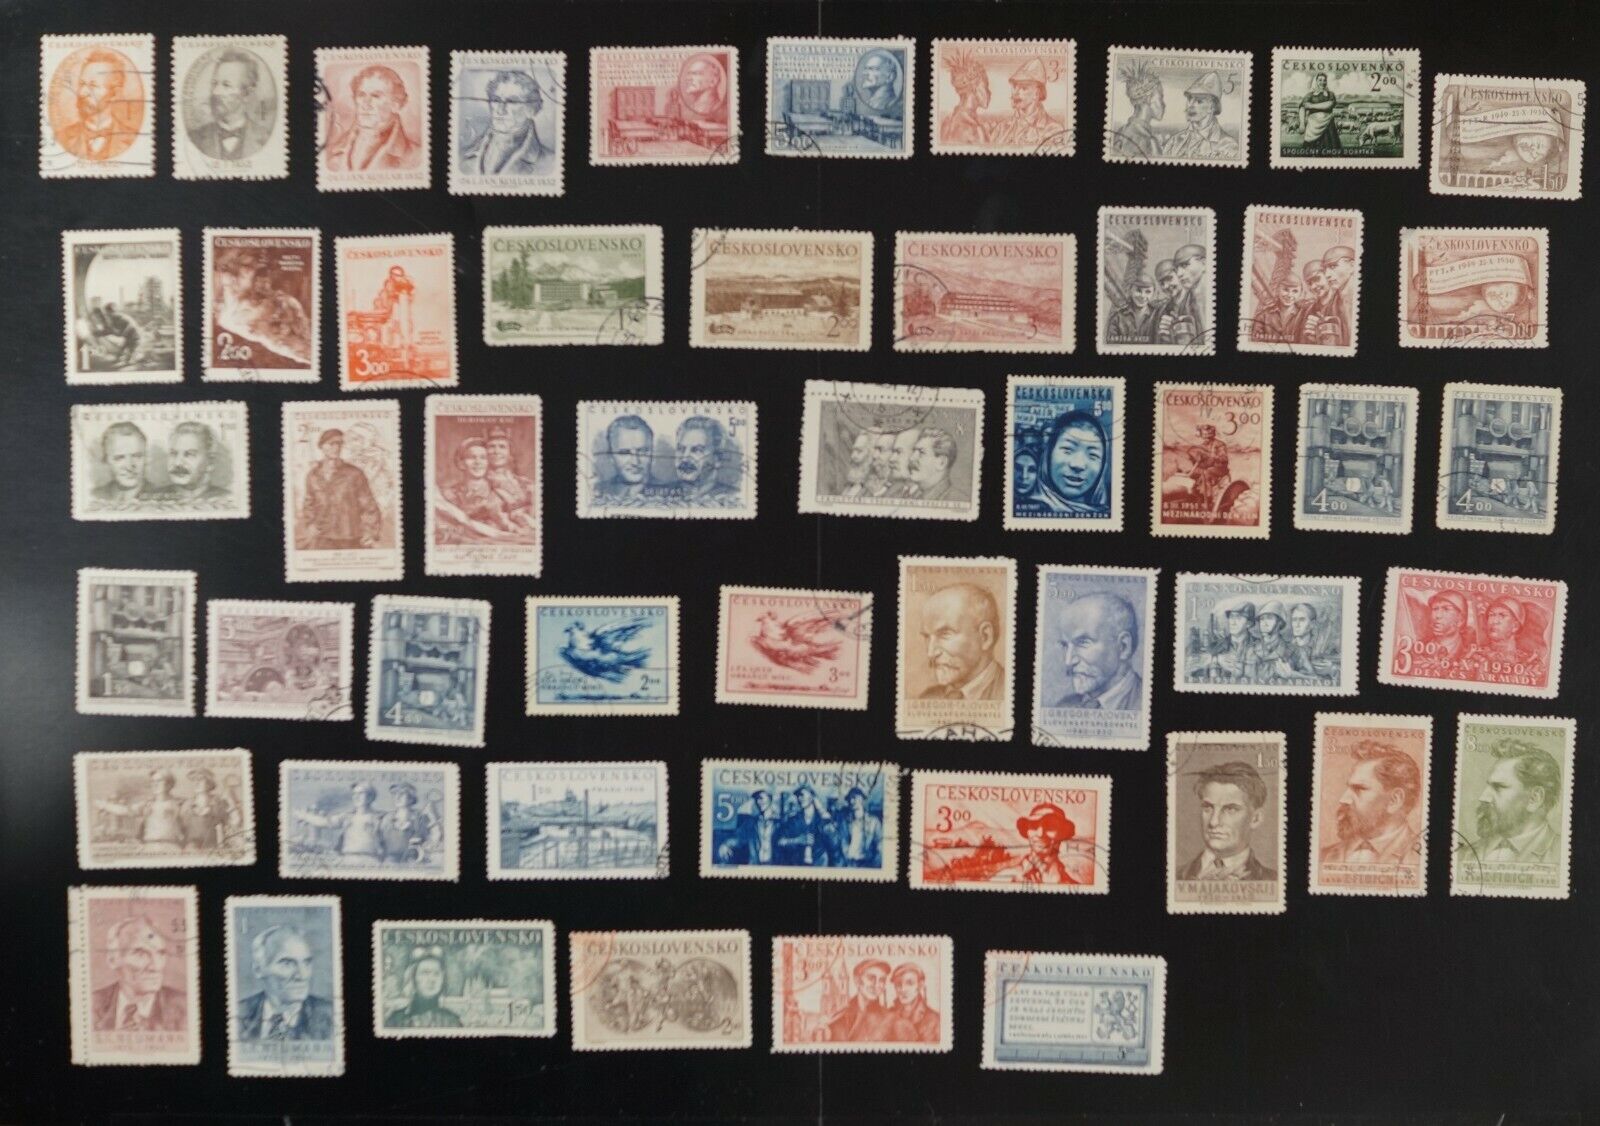 Czechoslovakia lot of F/VF used stamps 2020 cv$29.10 (k352)